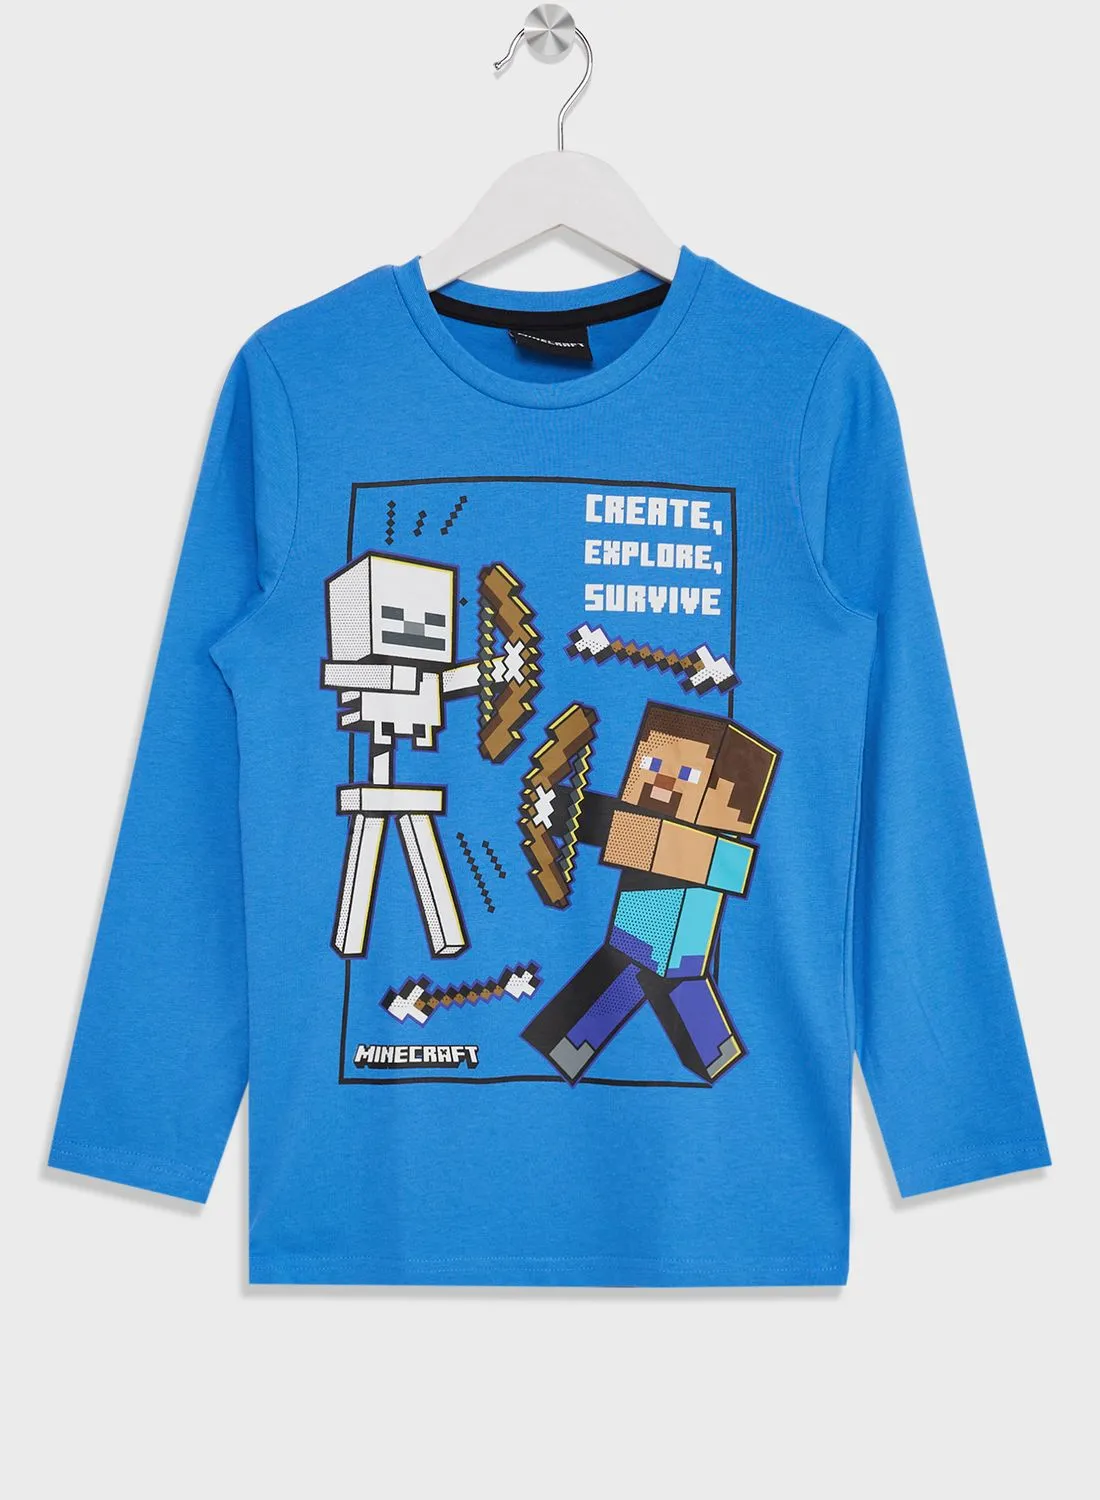 MINECRAFT Minecraft Boys Printed Long Sleeve T-Shirt